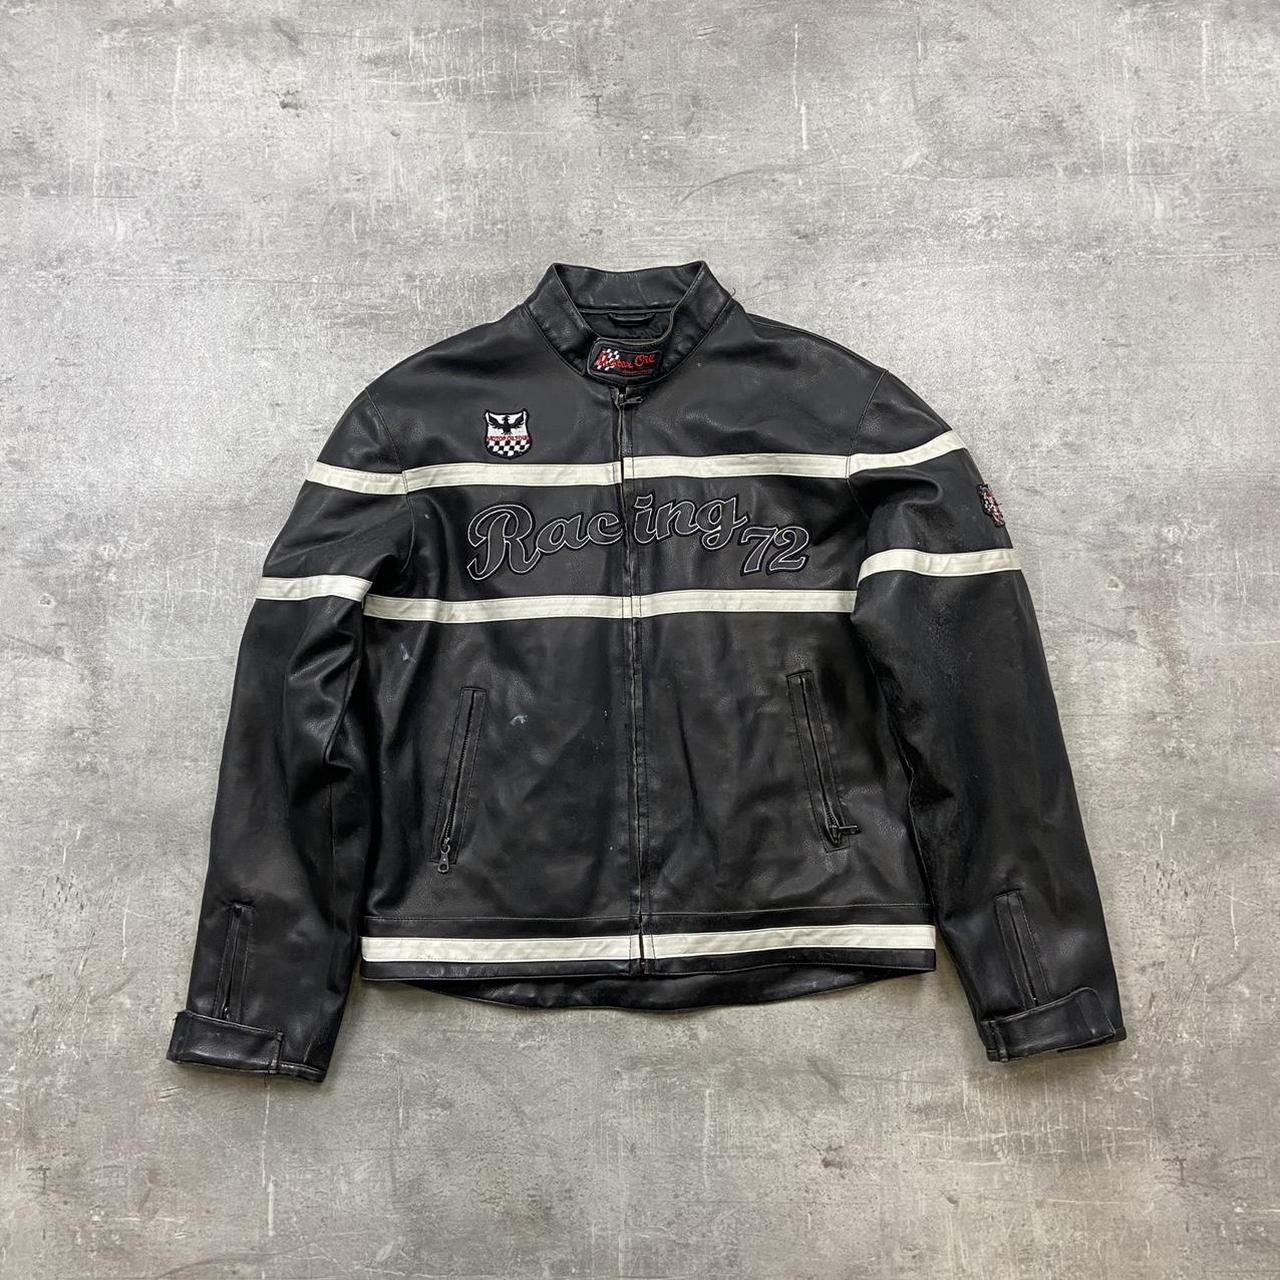 Vintage 90’s motorcycle leather jacket 🌊 biker... - Depop